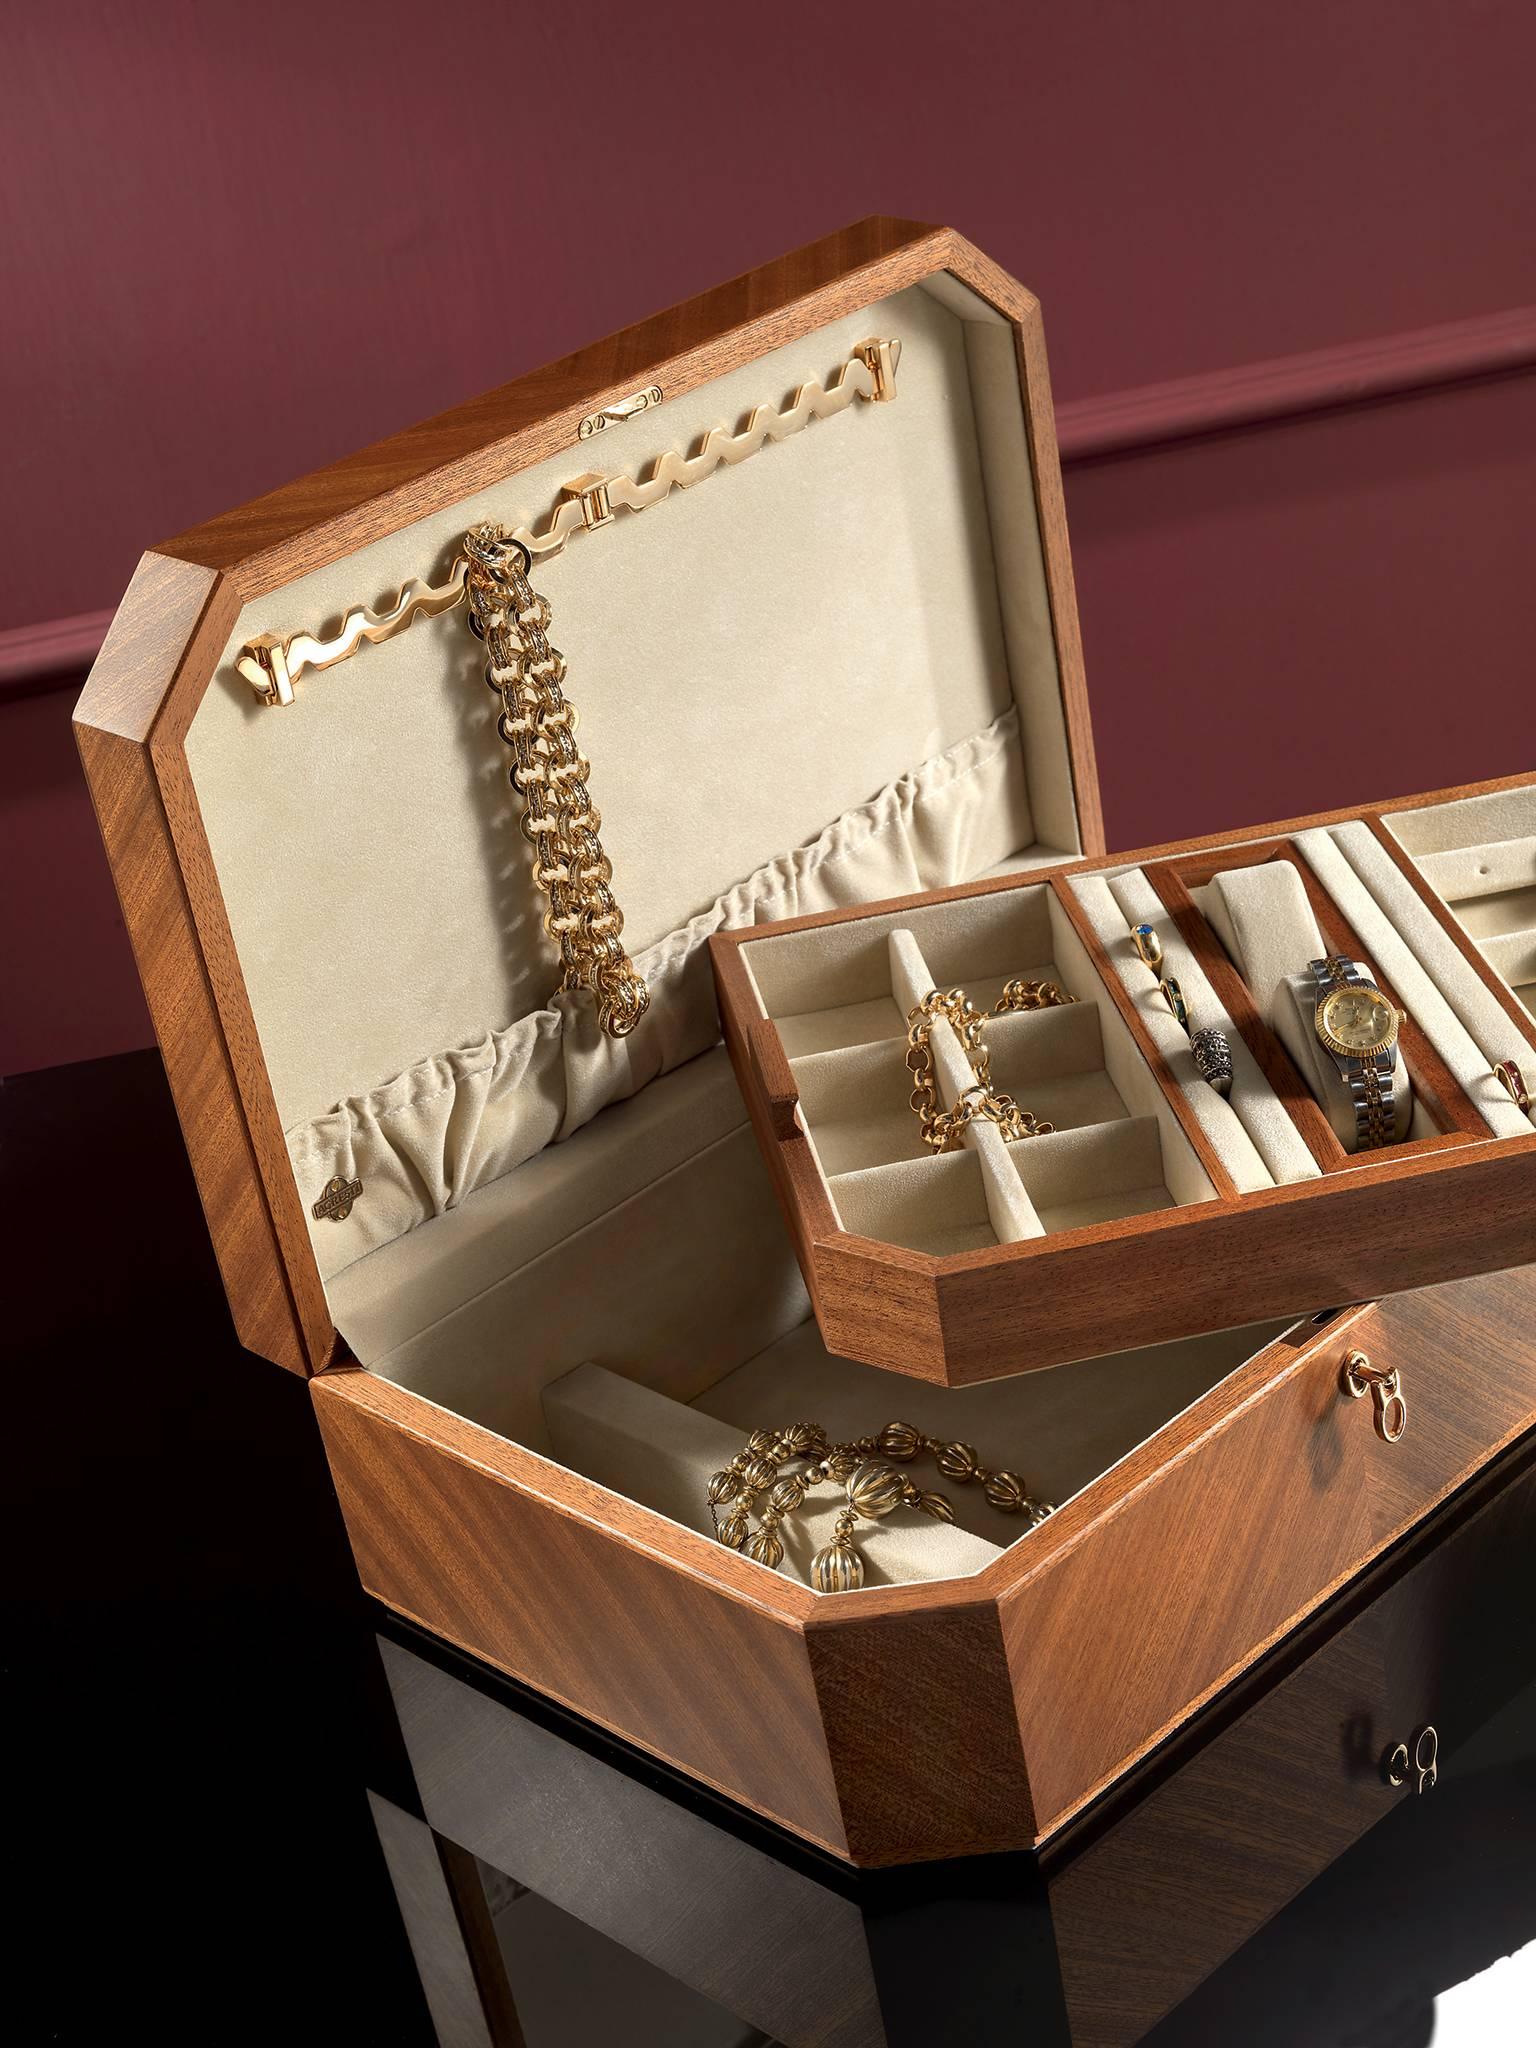 Hexagonal jewel box in briarwood and striped mahogany. Removable tray, necklace bar.